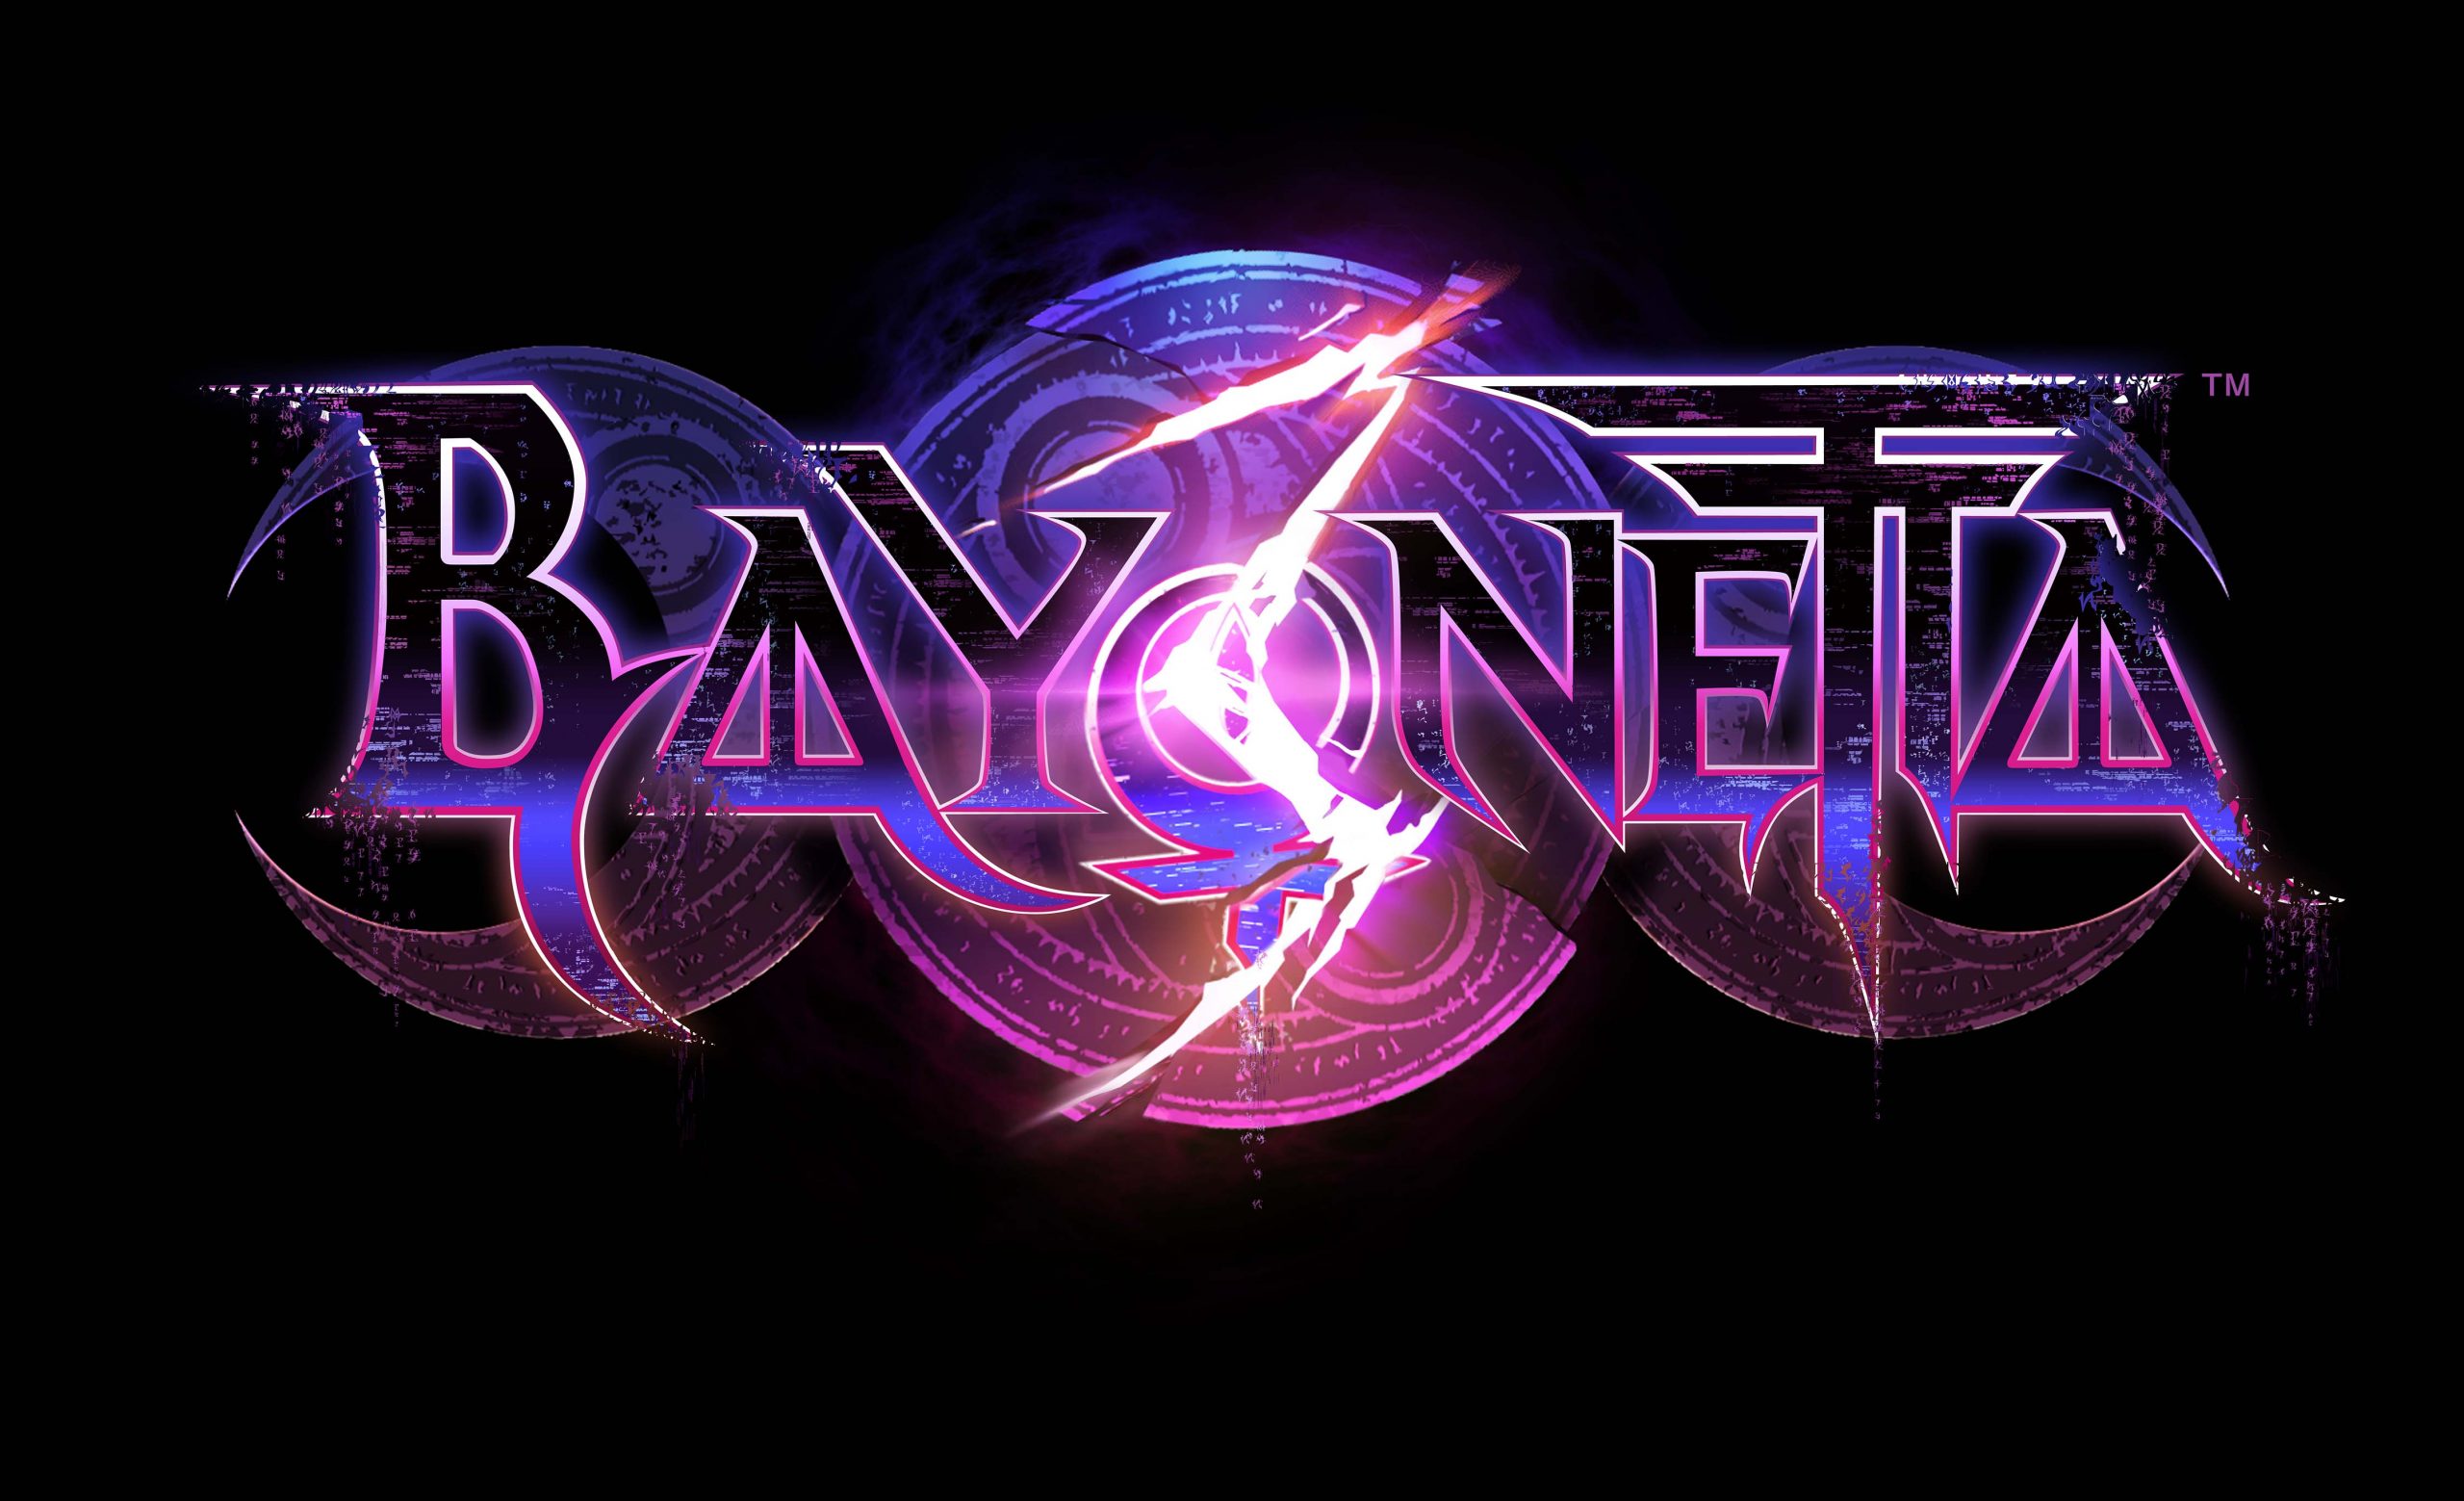 Bayonetta 3 release time and pre-loads